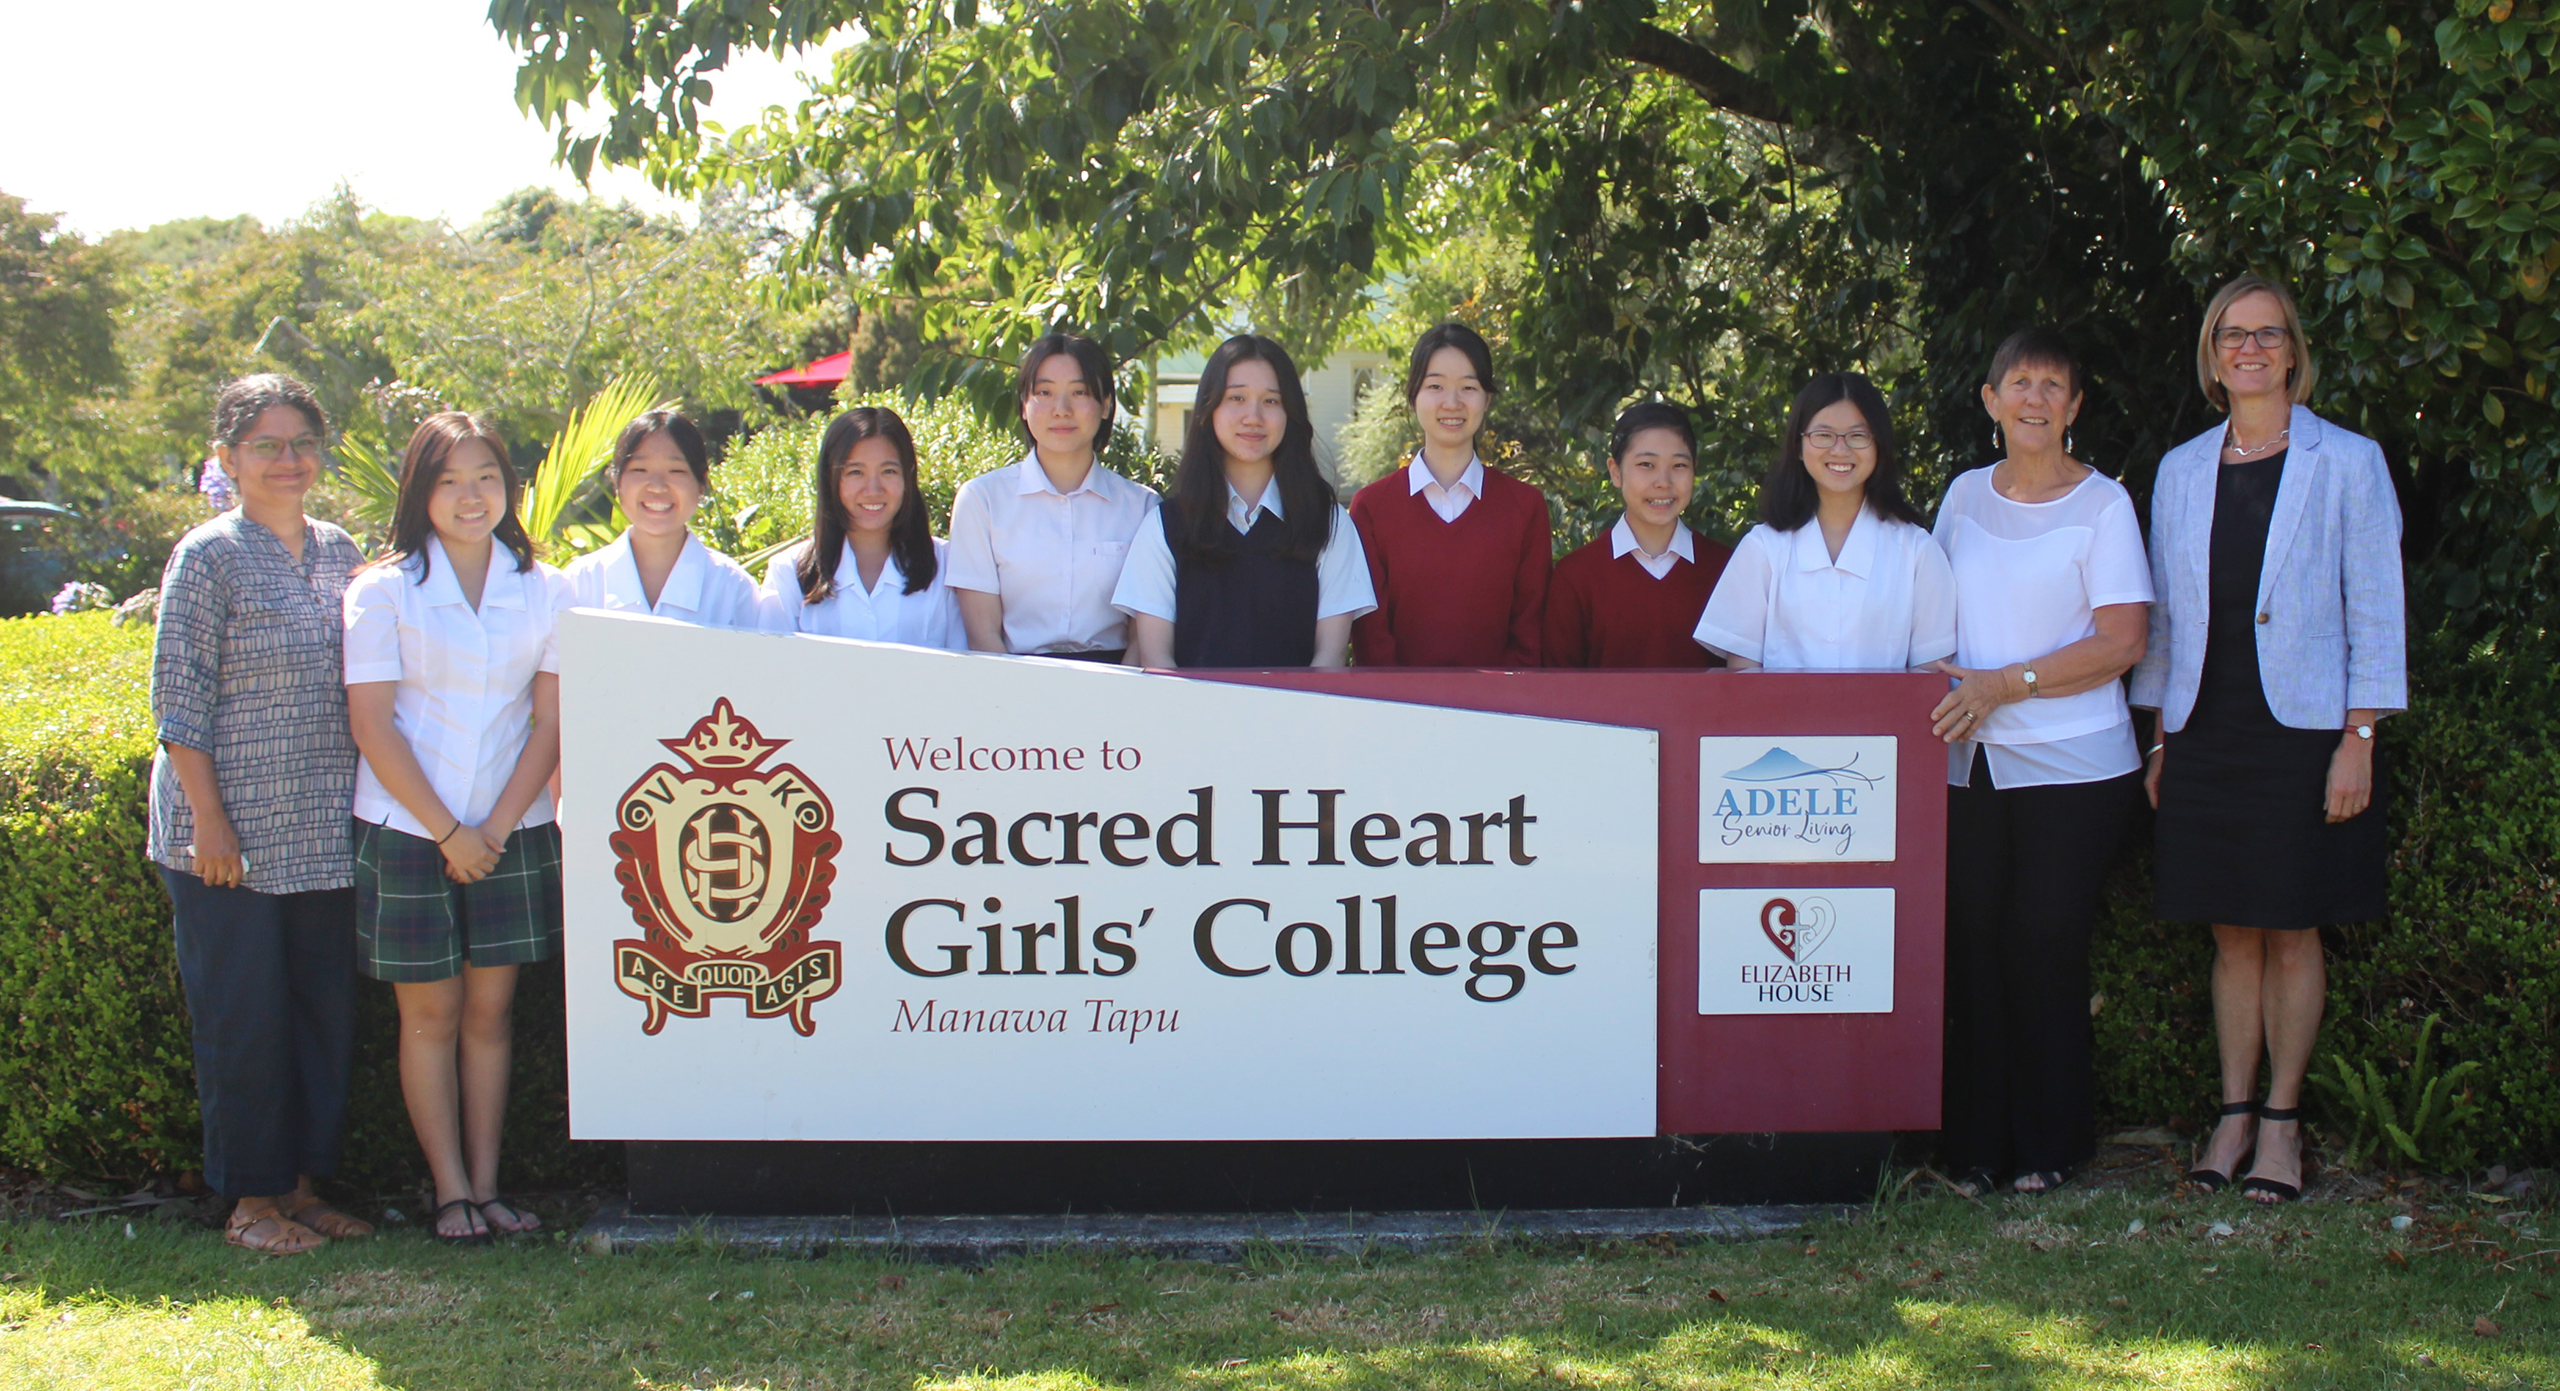 Sacred Heart Girls’ College